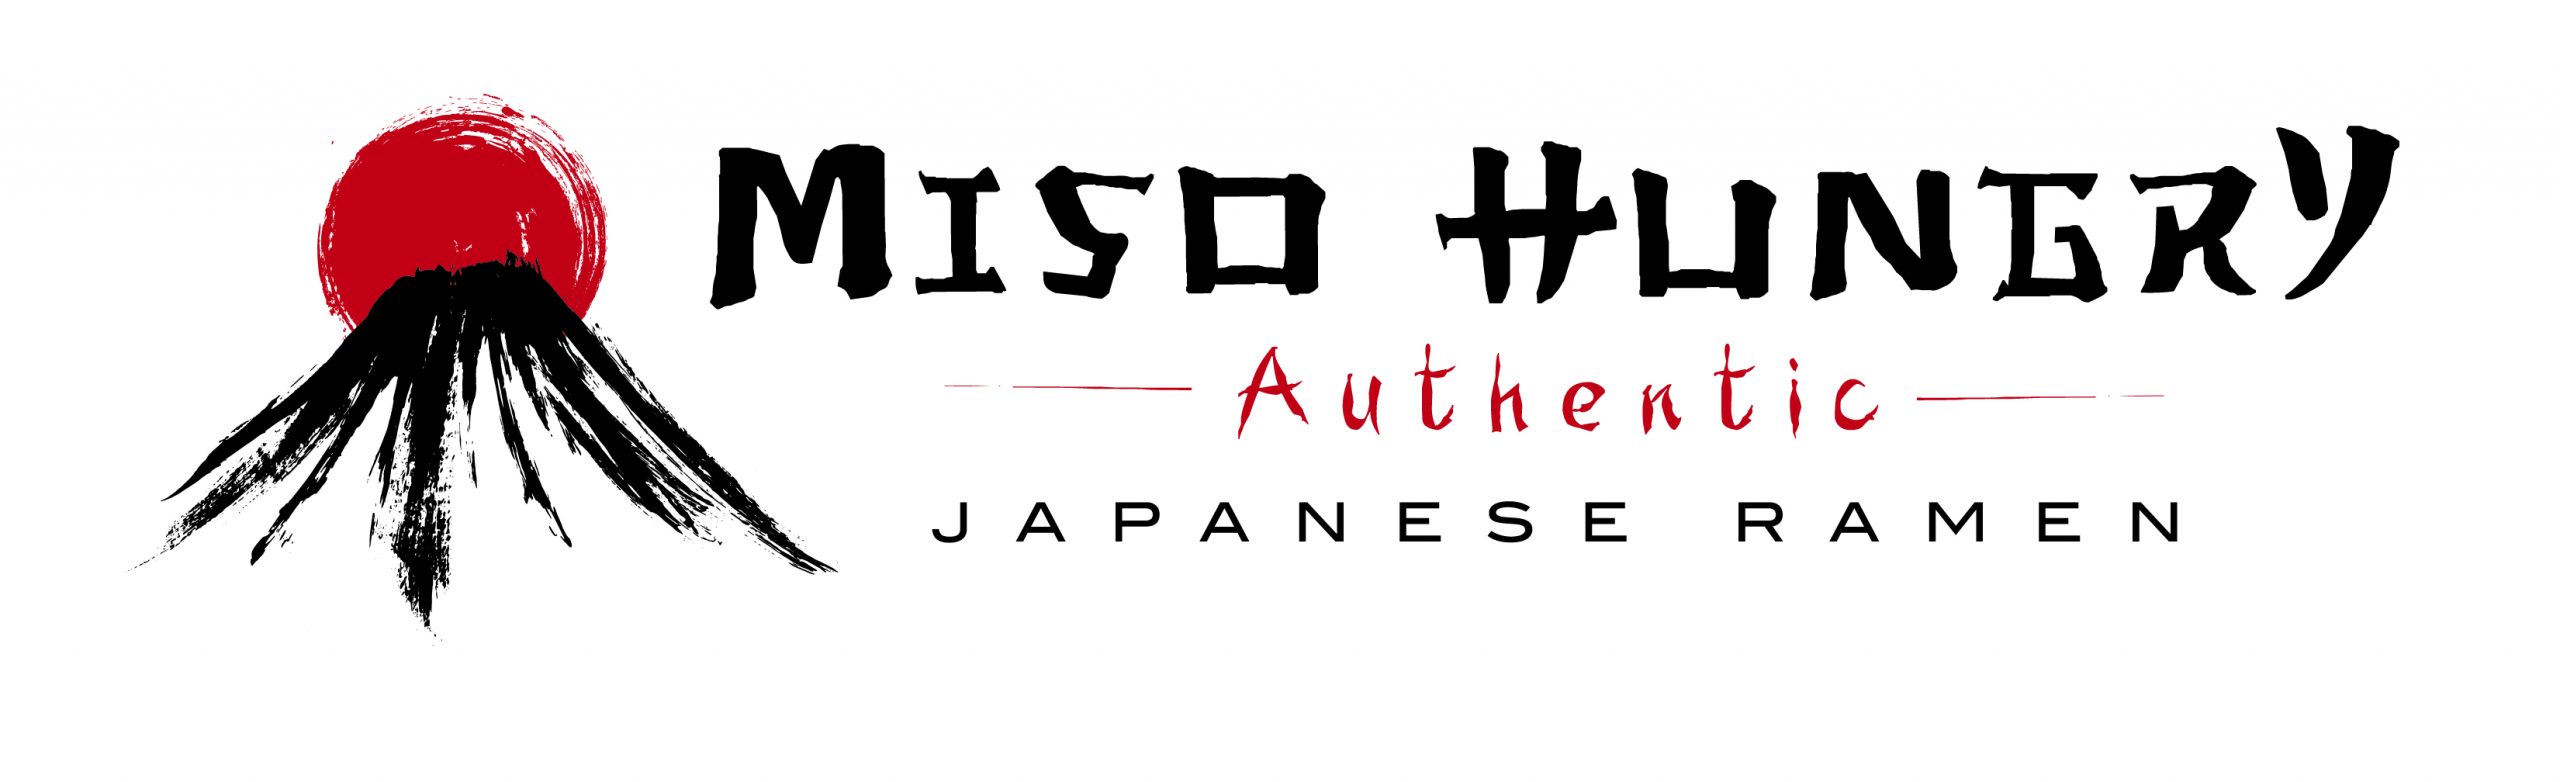 Miso Logo